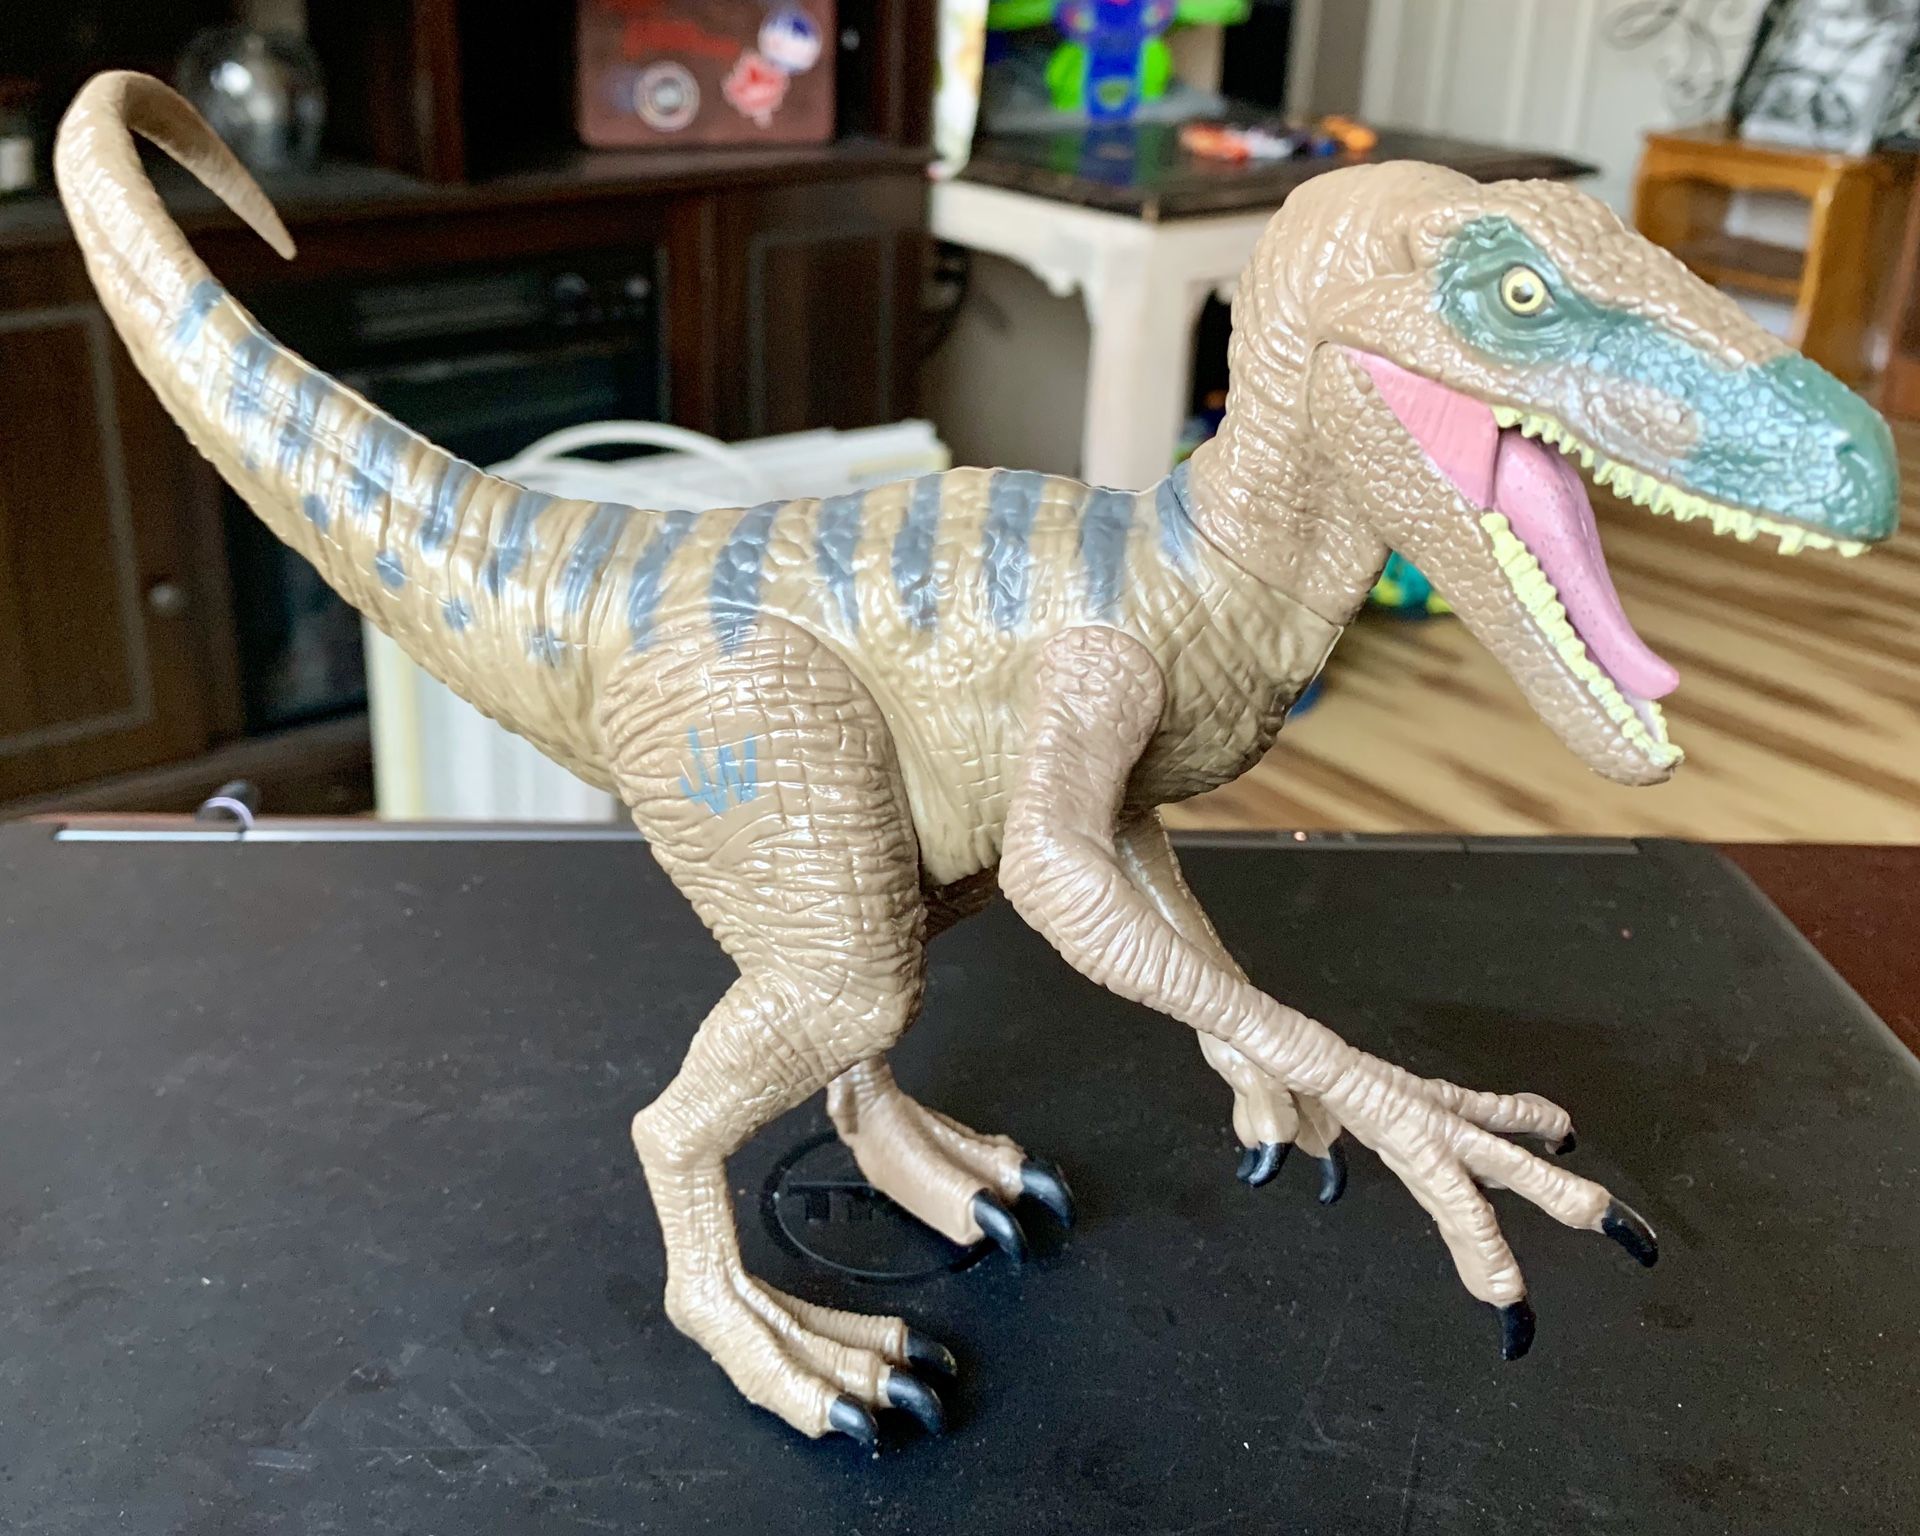 Jurassic Park / Jurassic World Velociraptor “Delta”